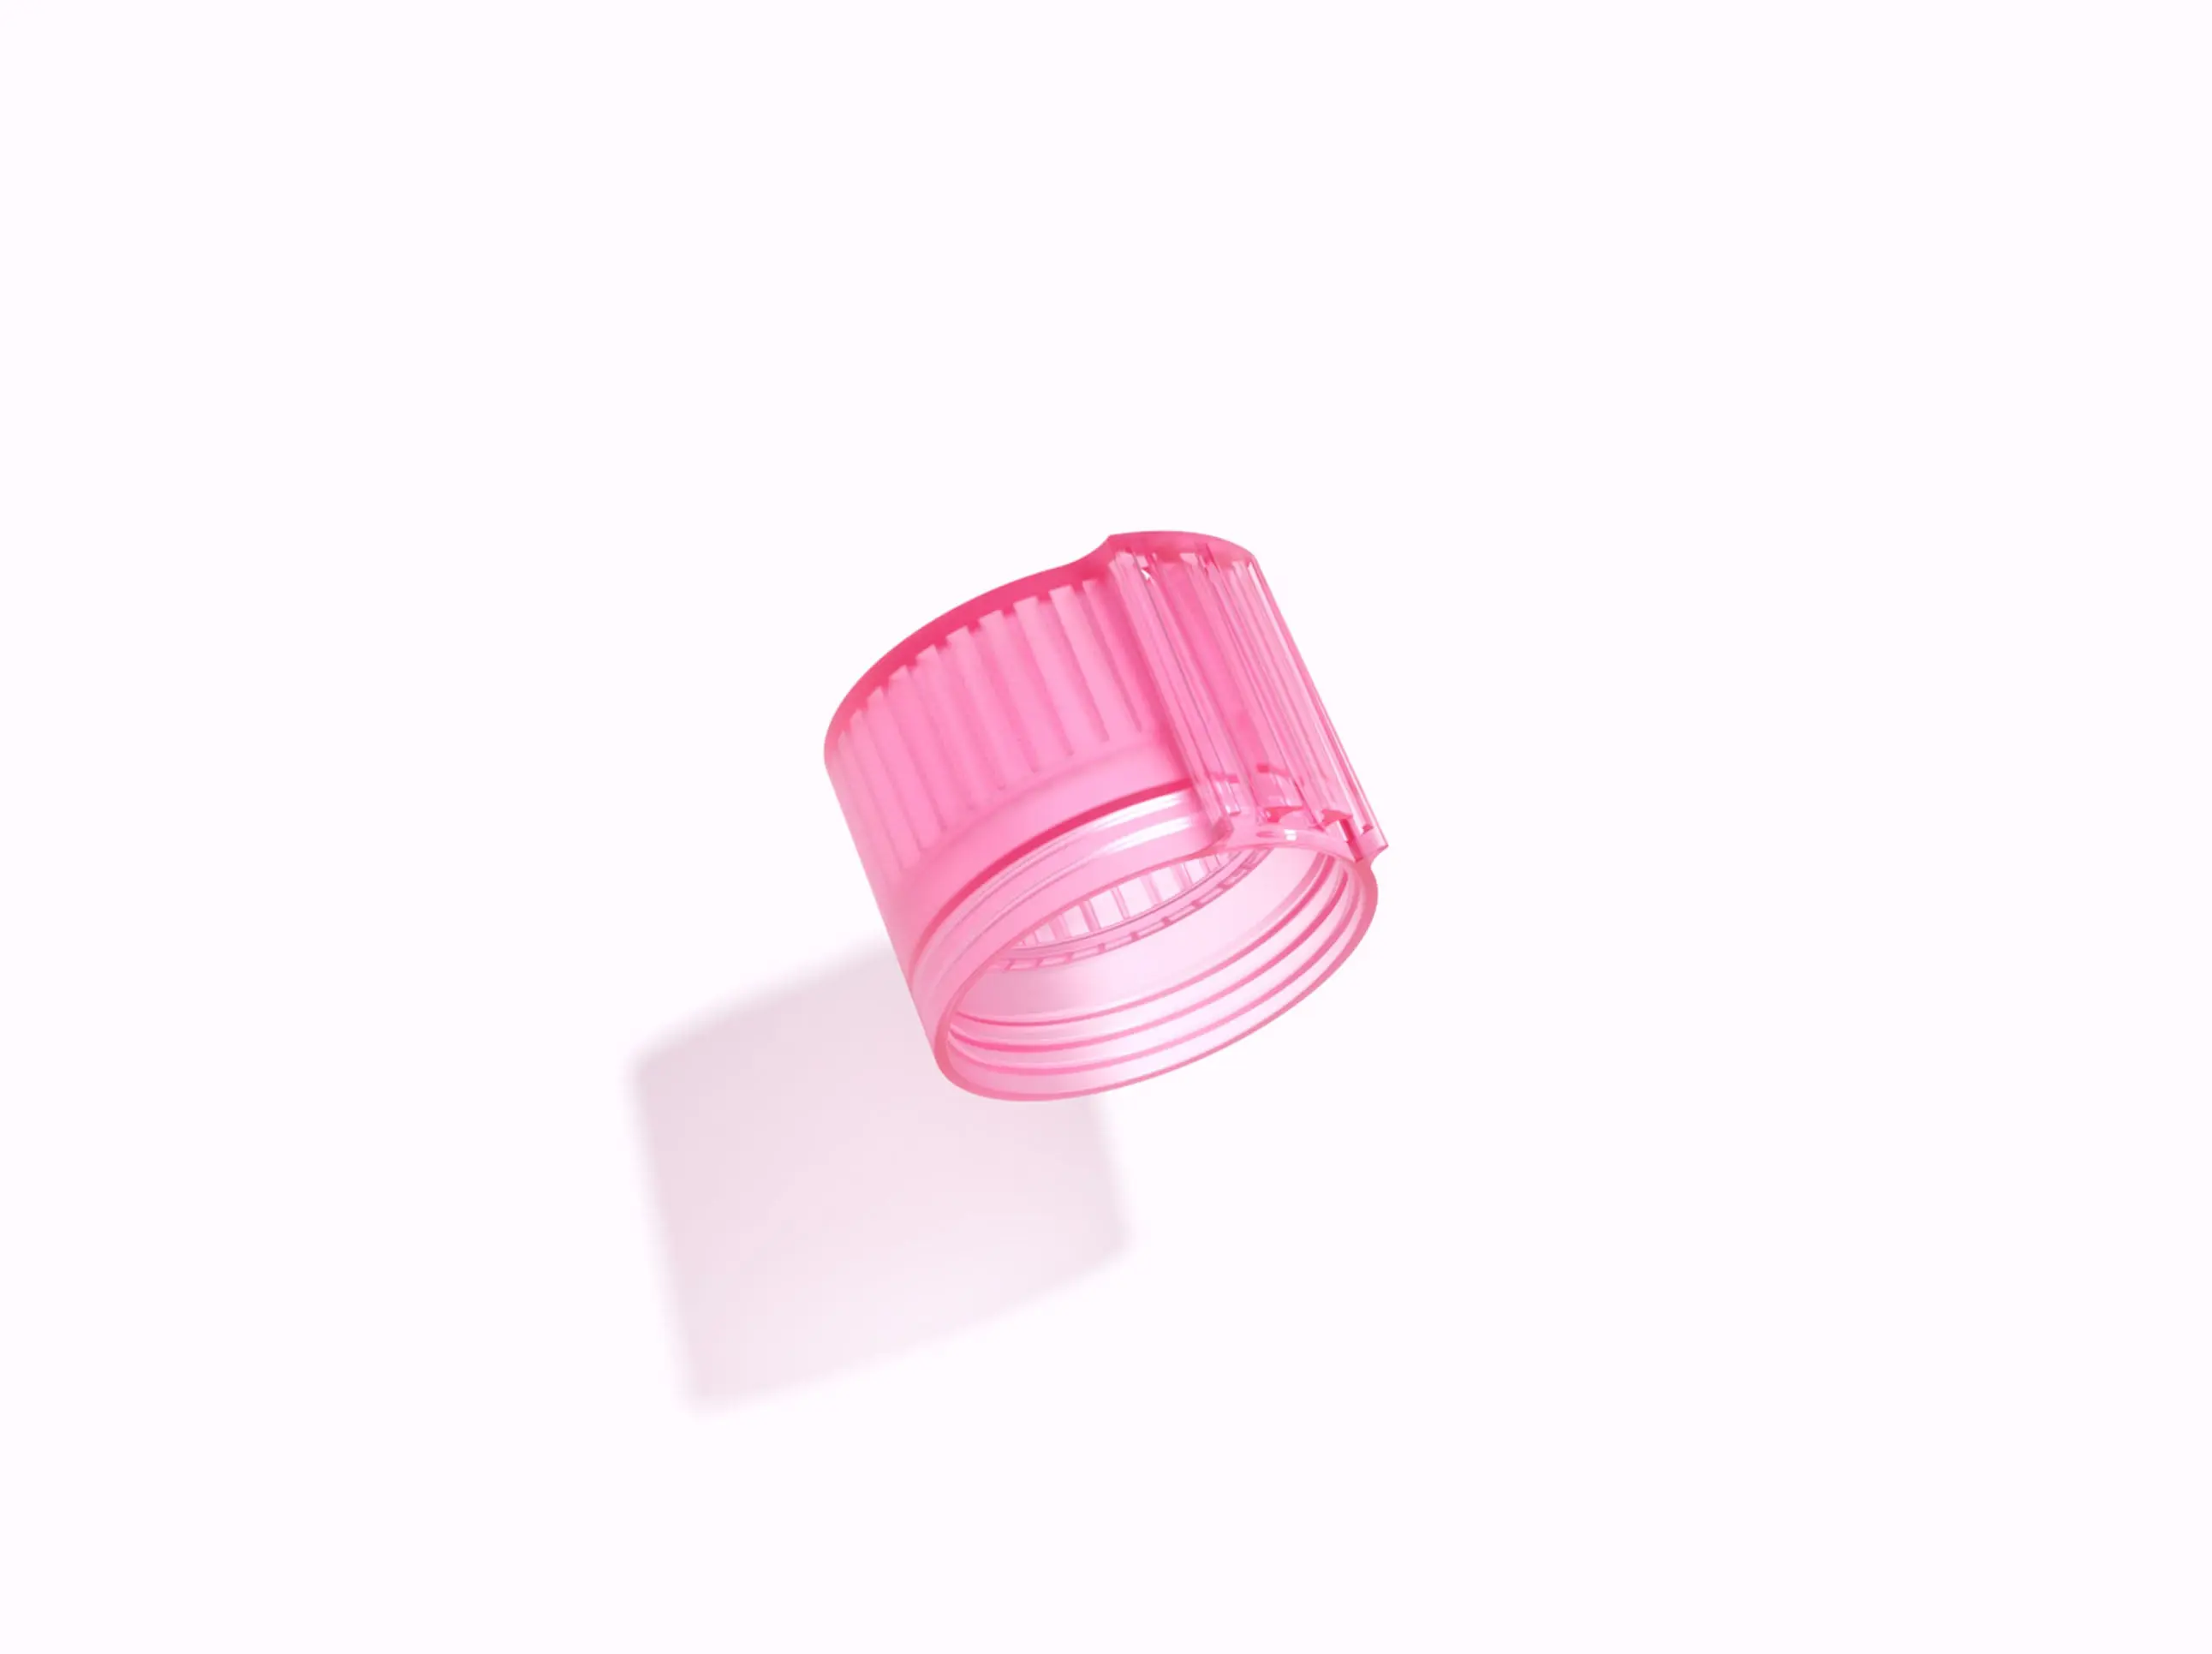 Hot Pink bottle cap